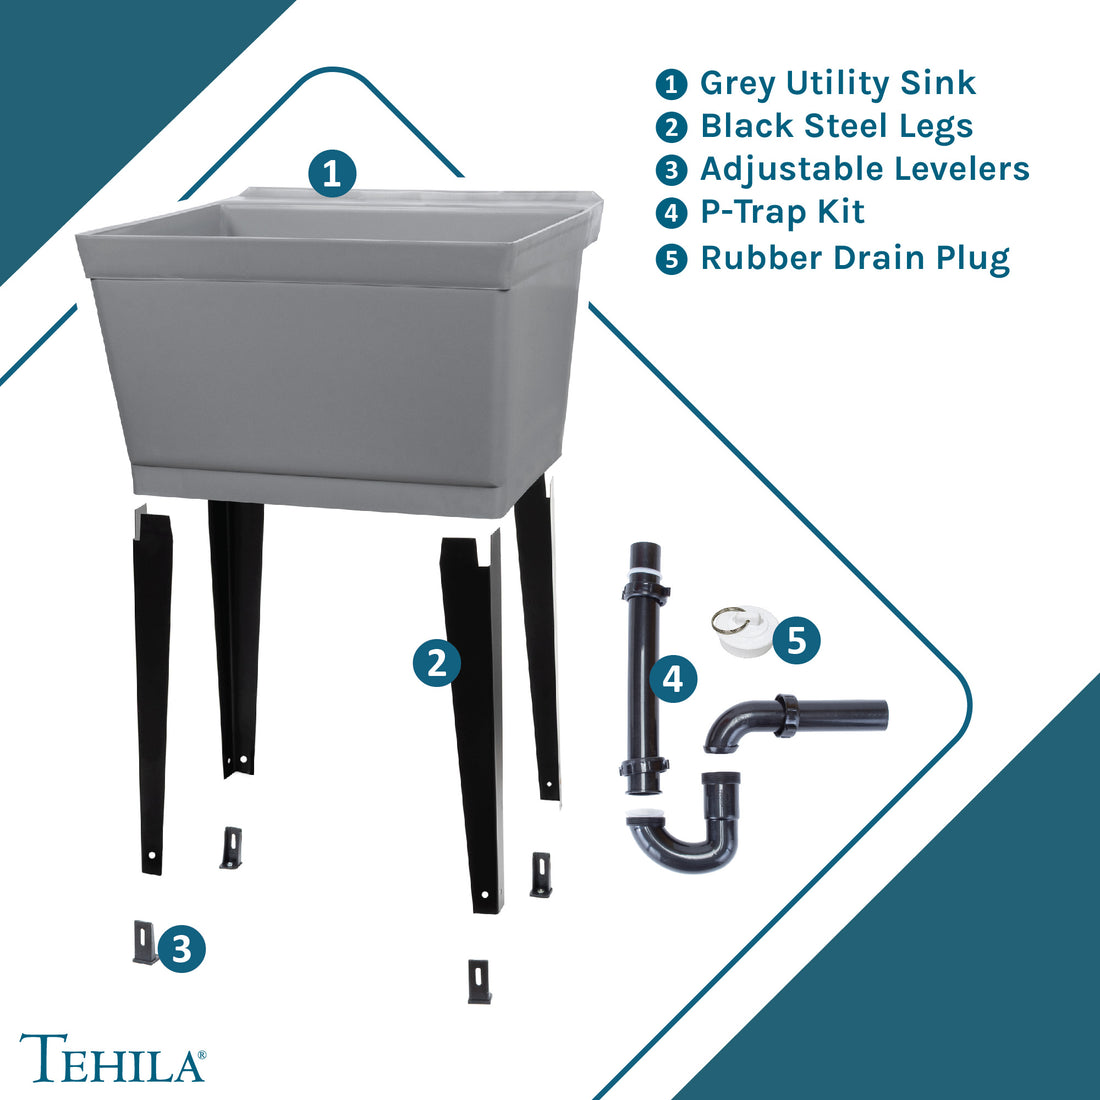 Grey Standard Utility Sink | Grey Utility Sink | Black Steel Legs | Adjustable Levelers |  P-Trap Kit | Rubber Drain Plug